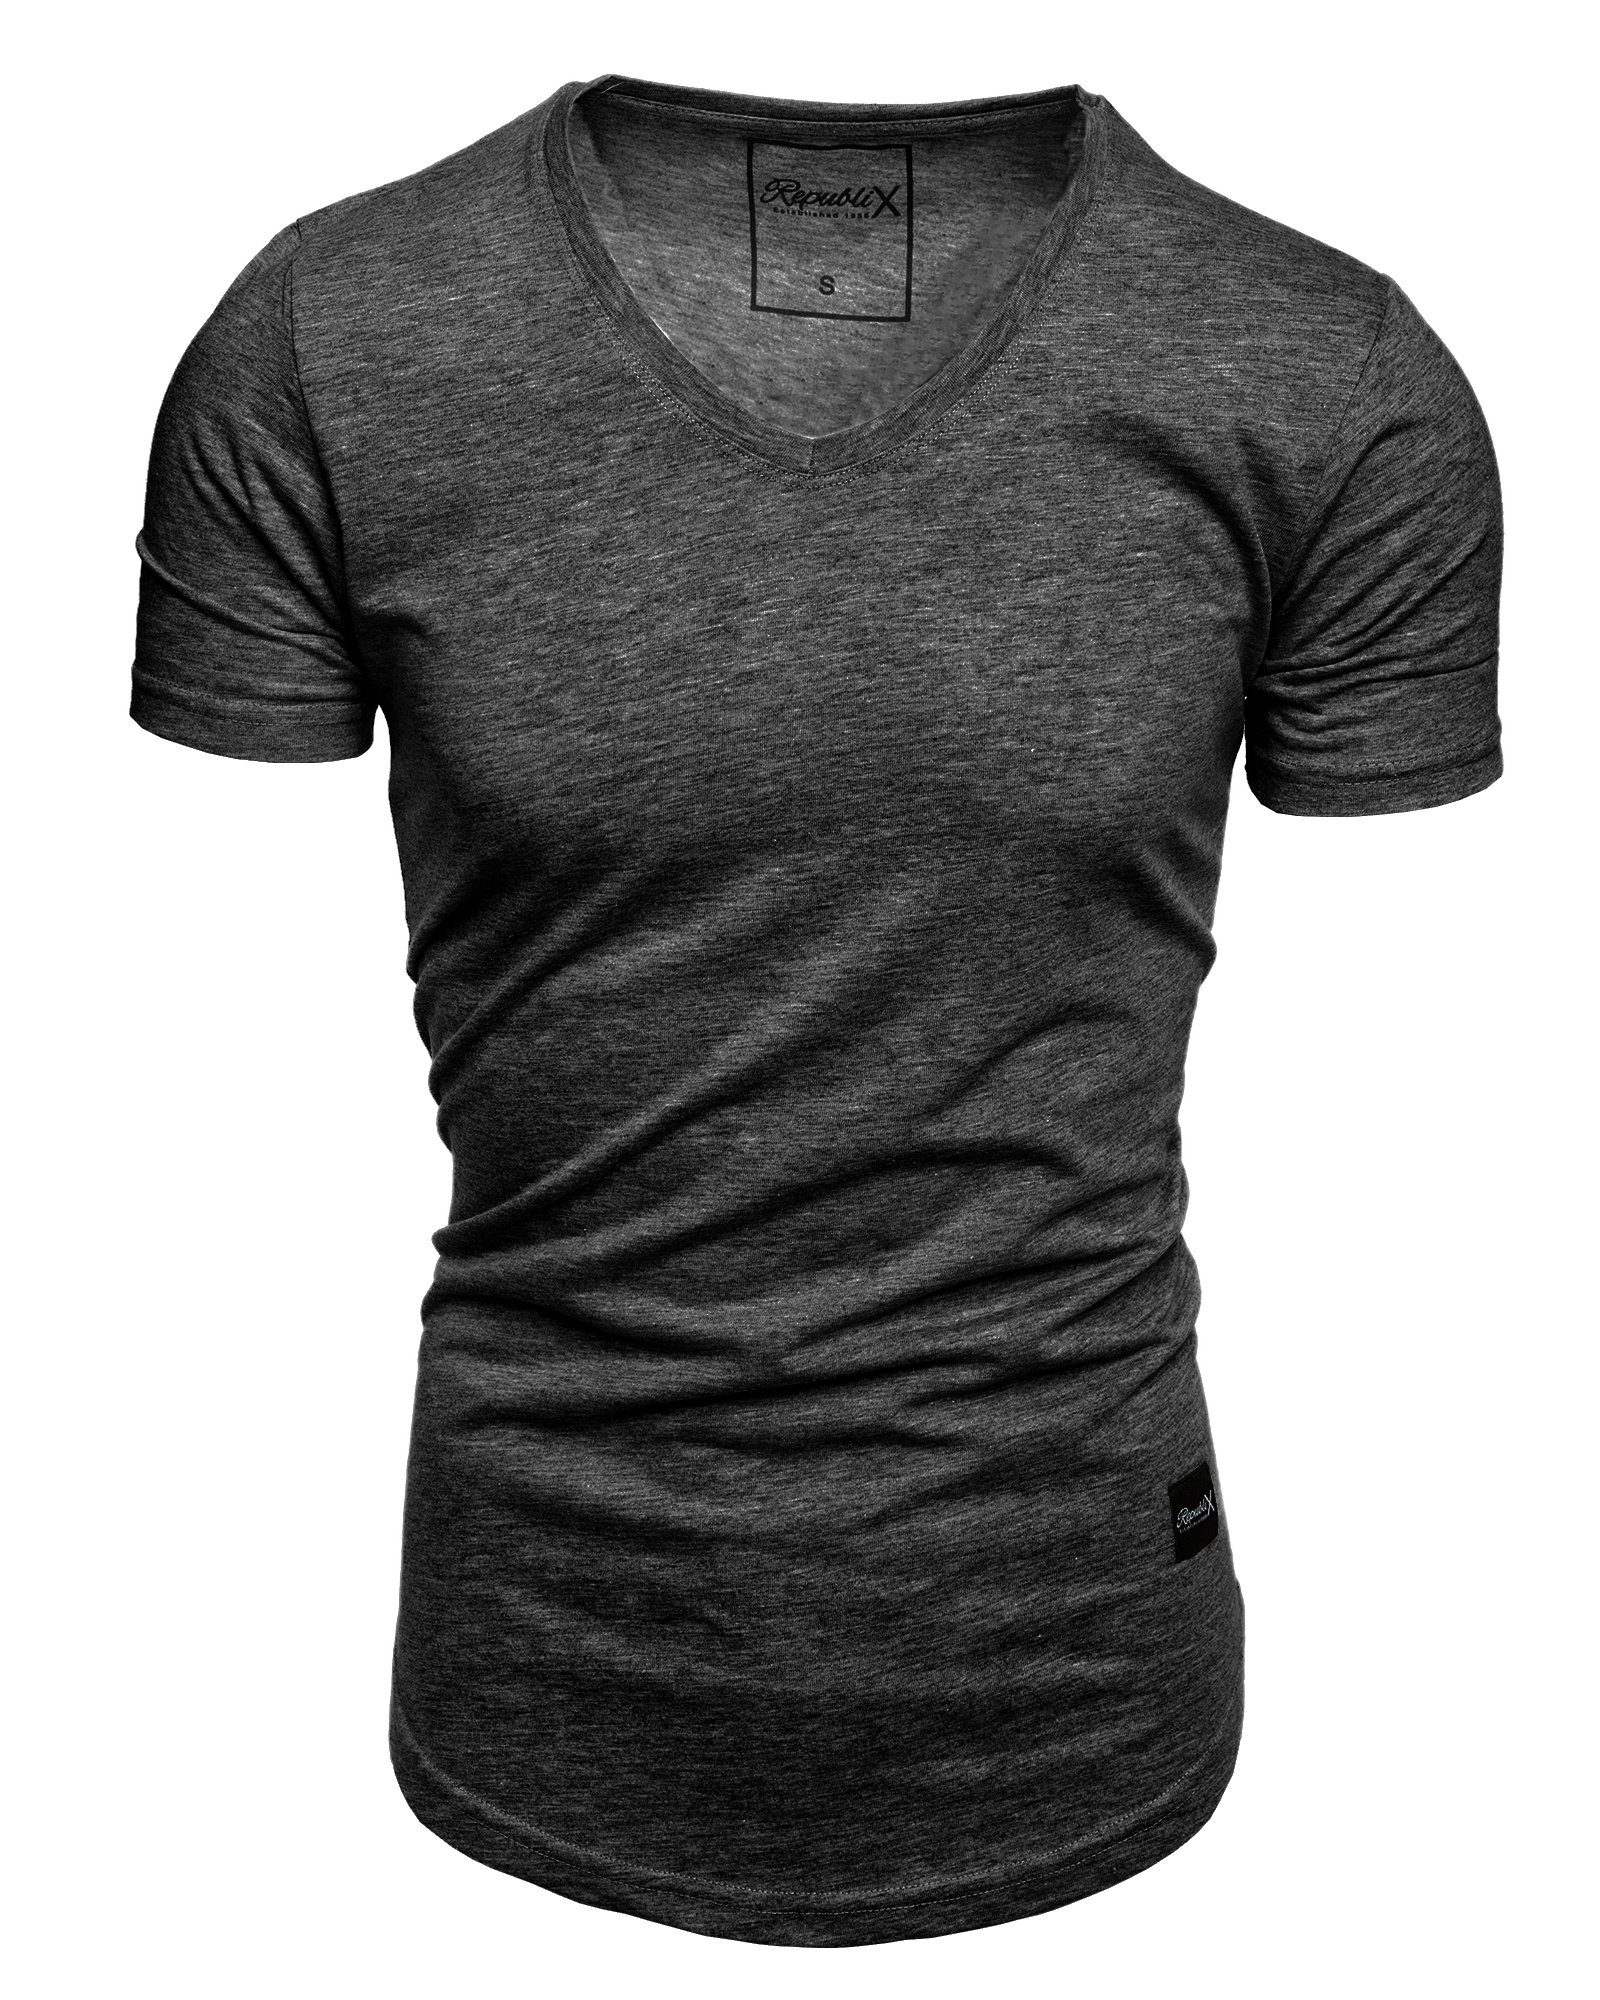 REPUBLIX Anthrazit Melange Shirt T-Shirt BRANDON mit V-Ausschnitt Oversize Basic Herren